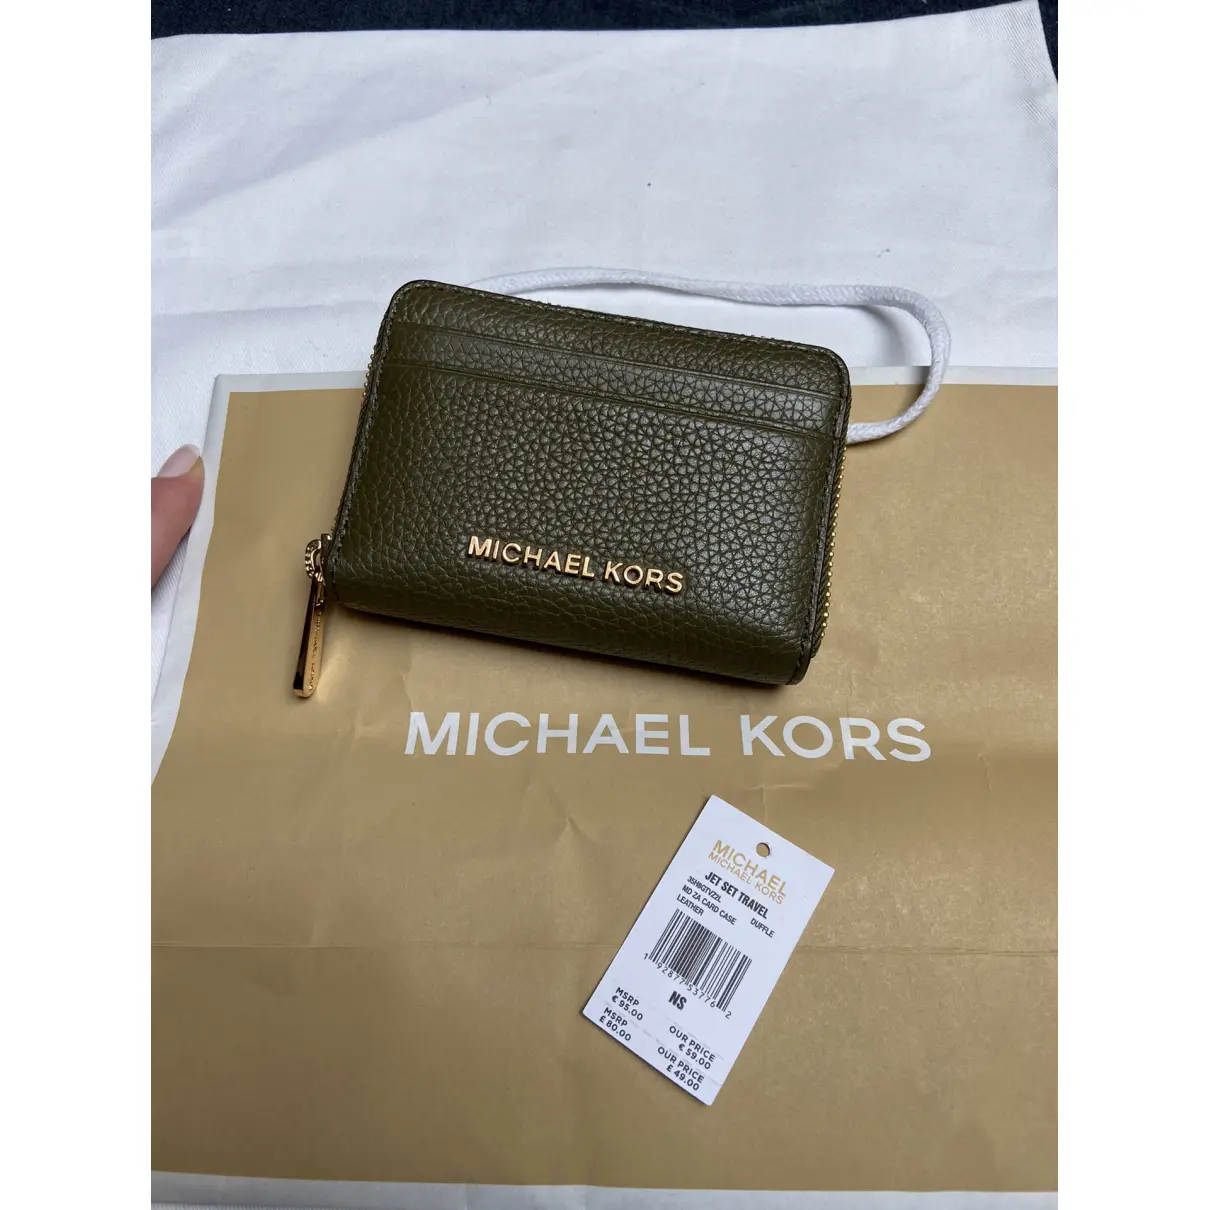 Buy Michael Kors Jet Set leather wallet online